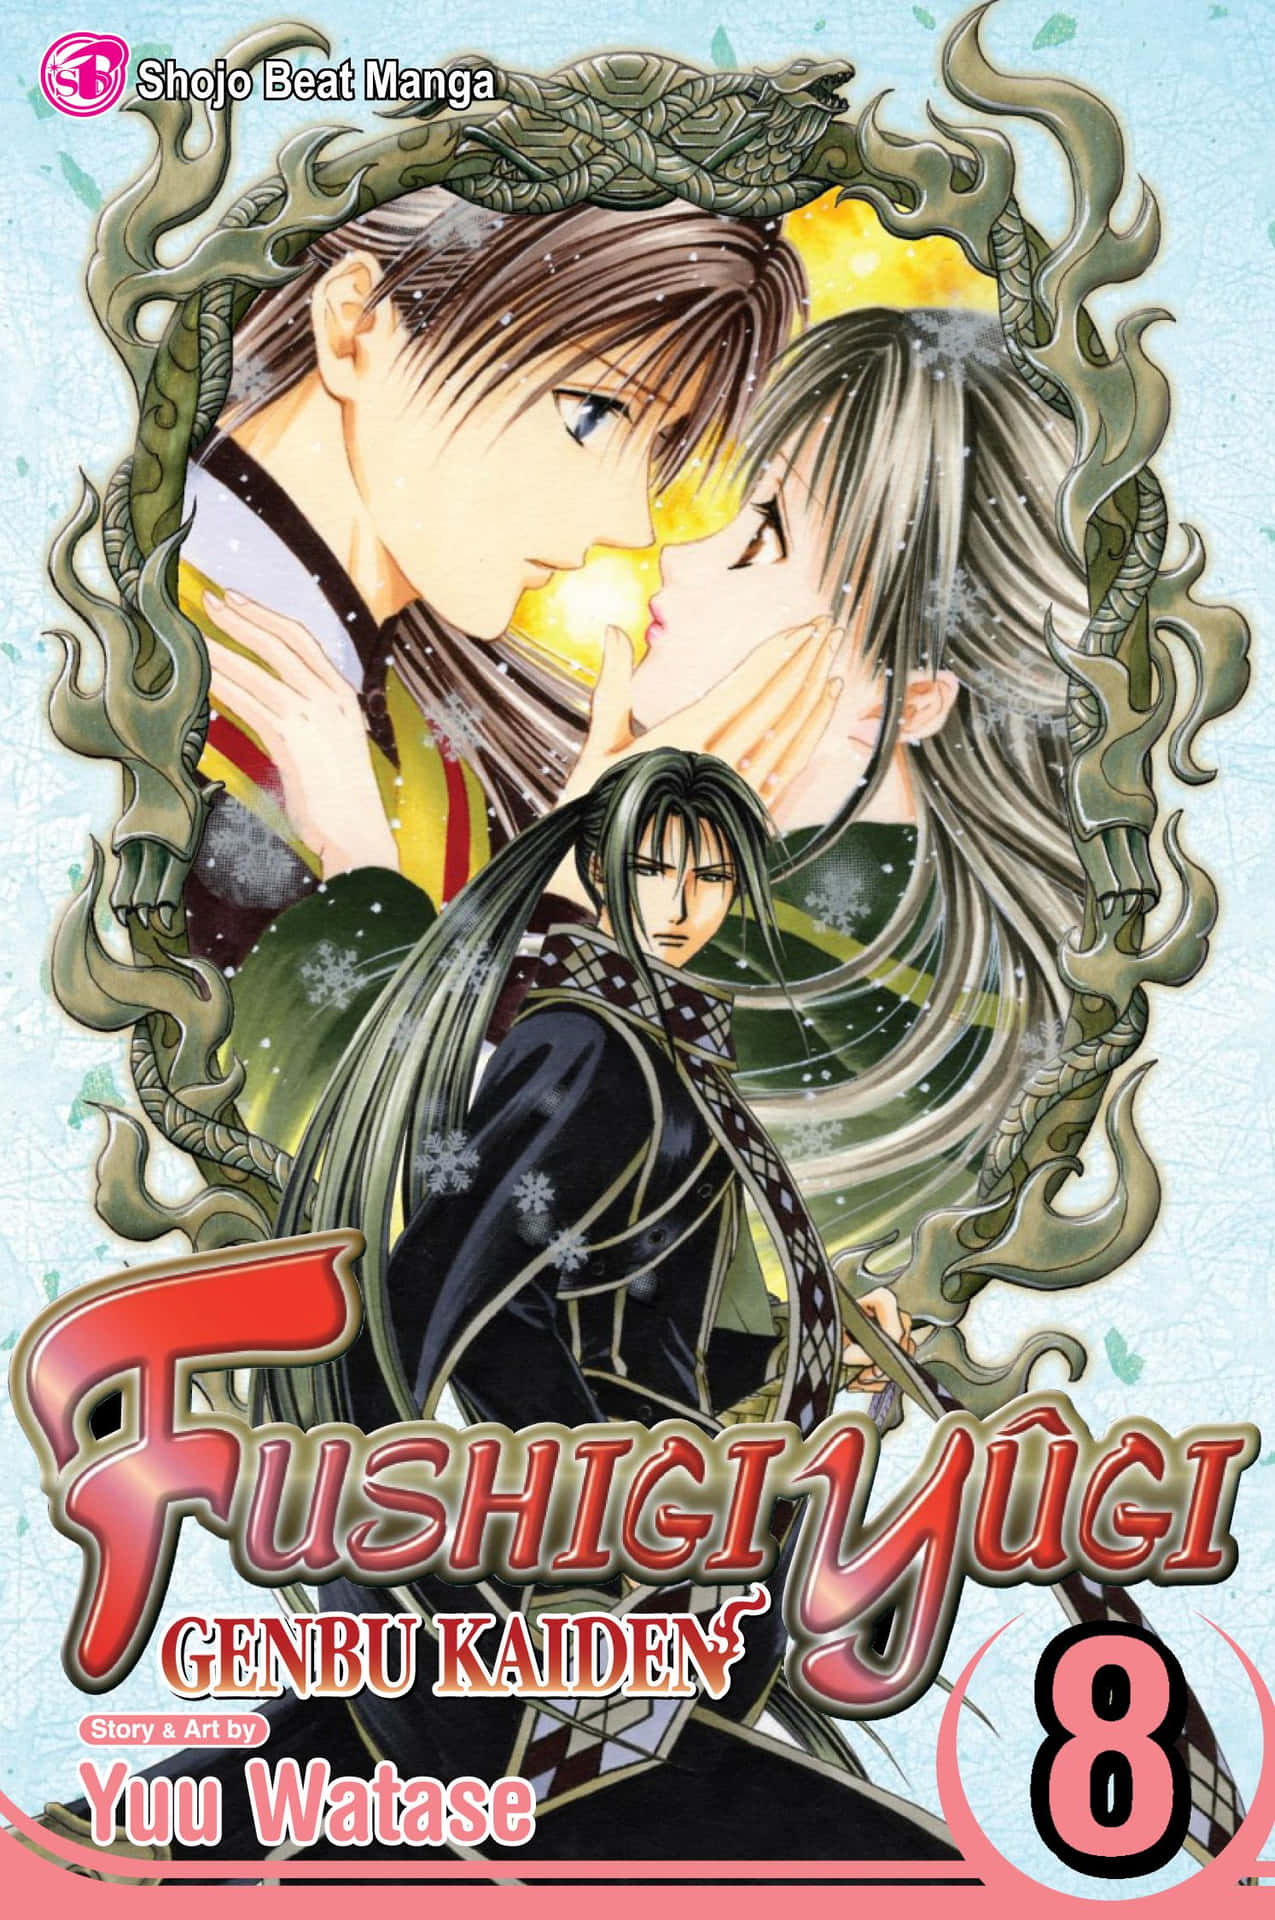 Beautiful Illustration of Fushigi Yuugi, a Classic Anime